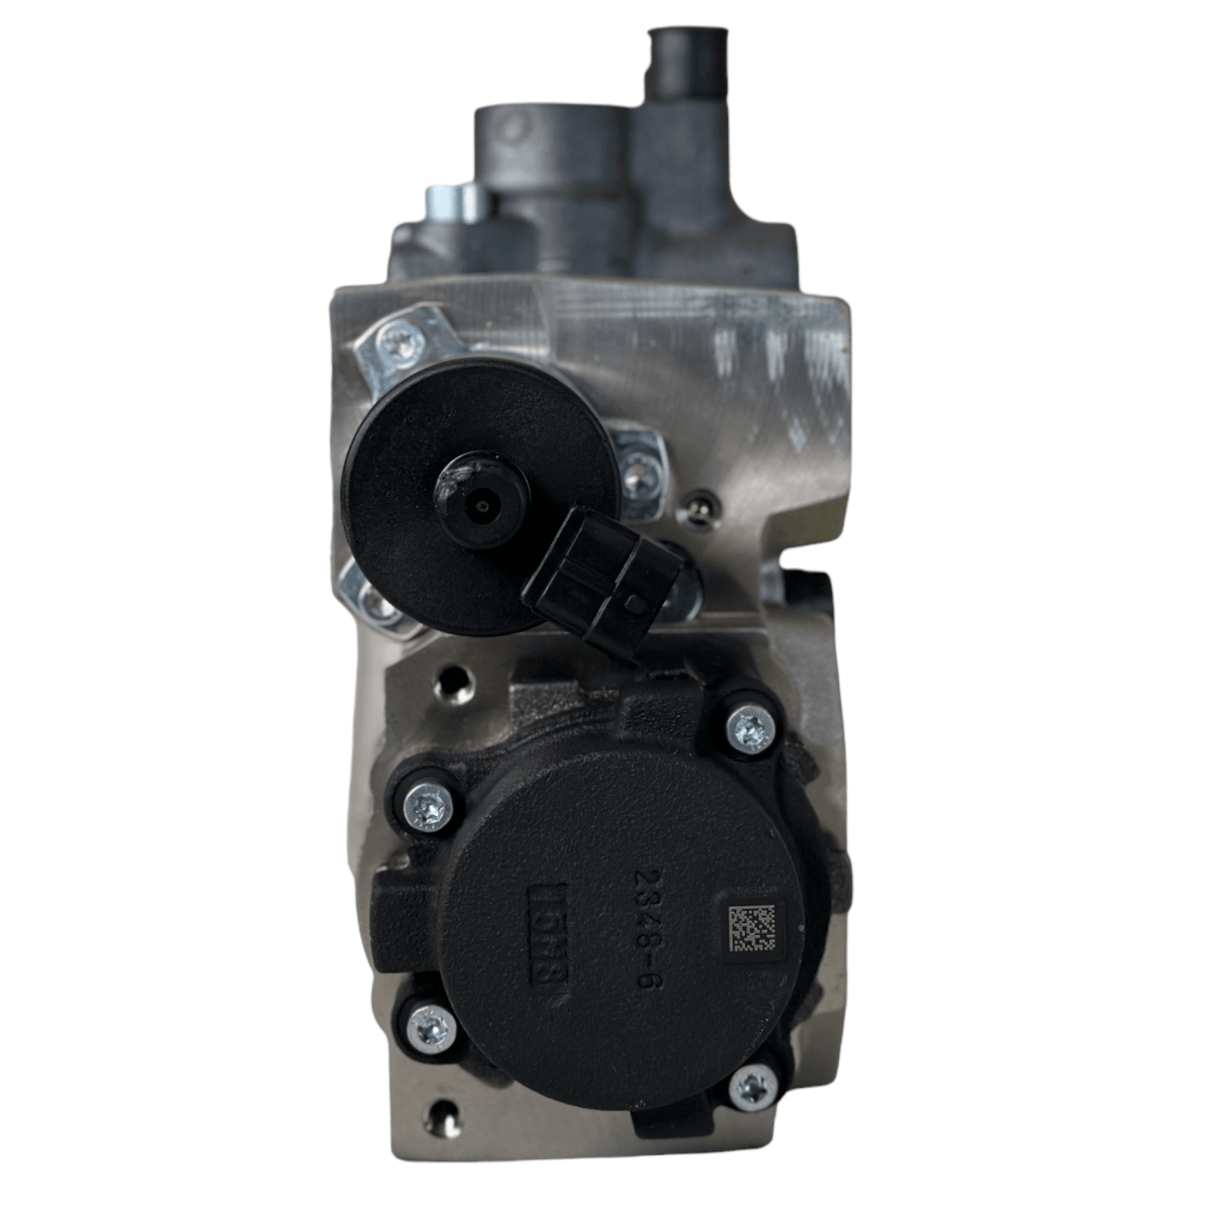 RA4720901550 Genuine Detroit Diesel Fuel Injection Pump For DD15 / DD16.